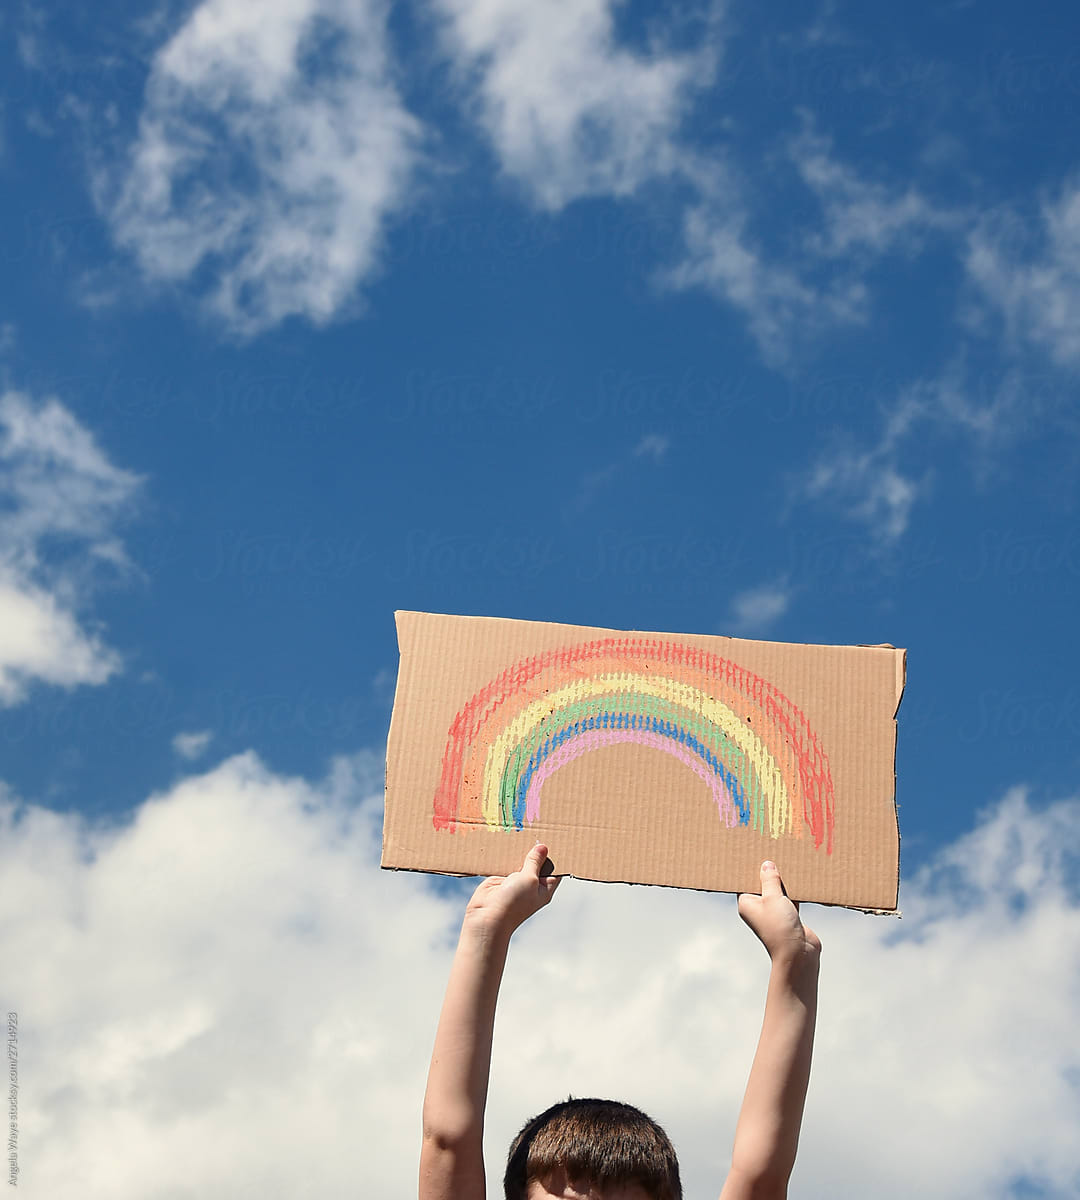 Boy Holding Rainbow Art in Sky